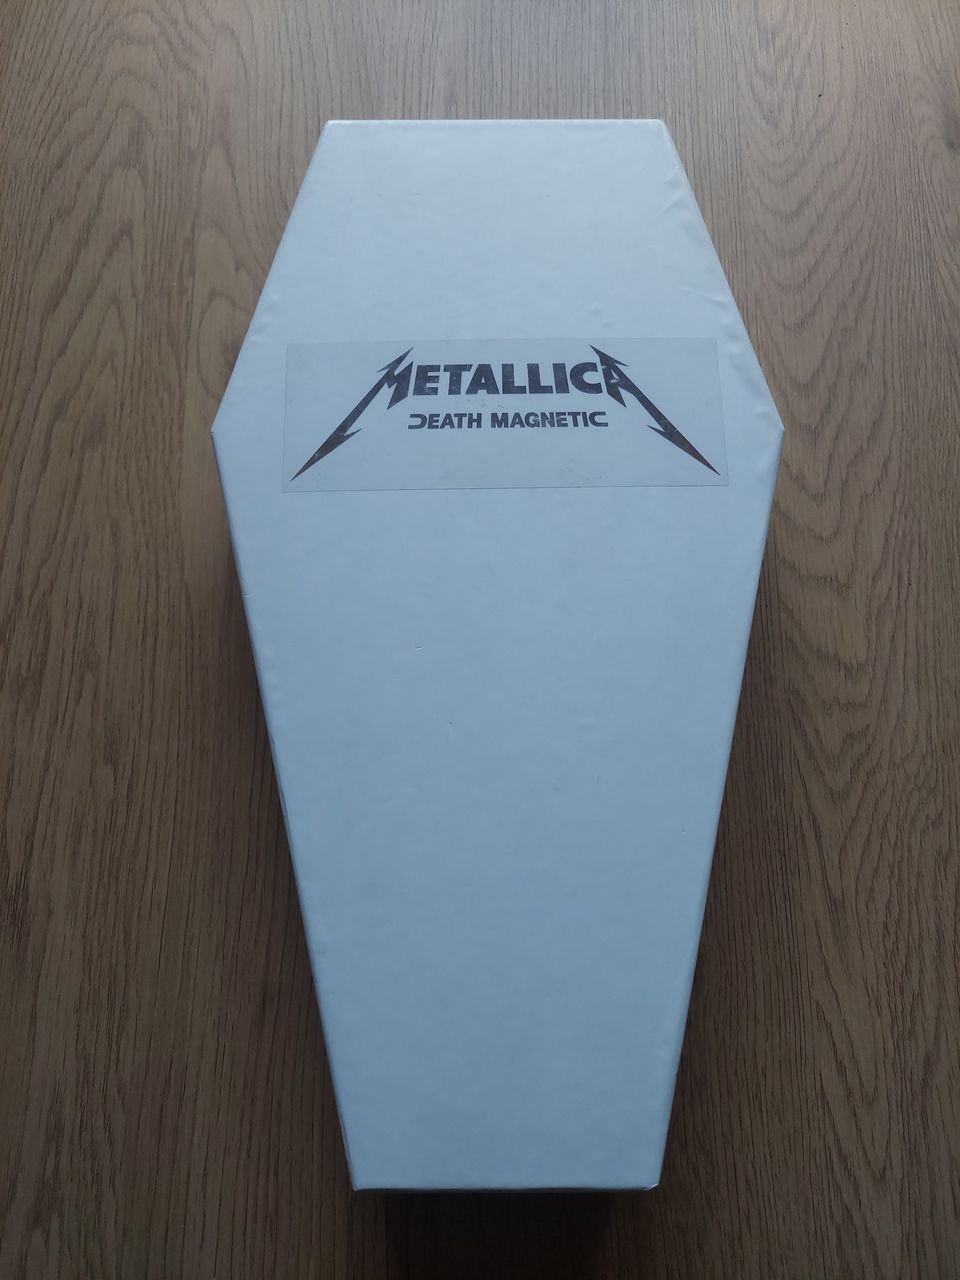 Metallica - Death Magnetic Coffin Box